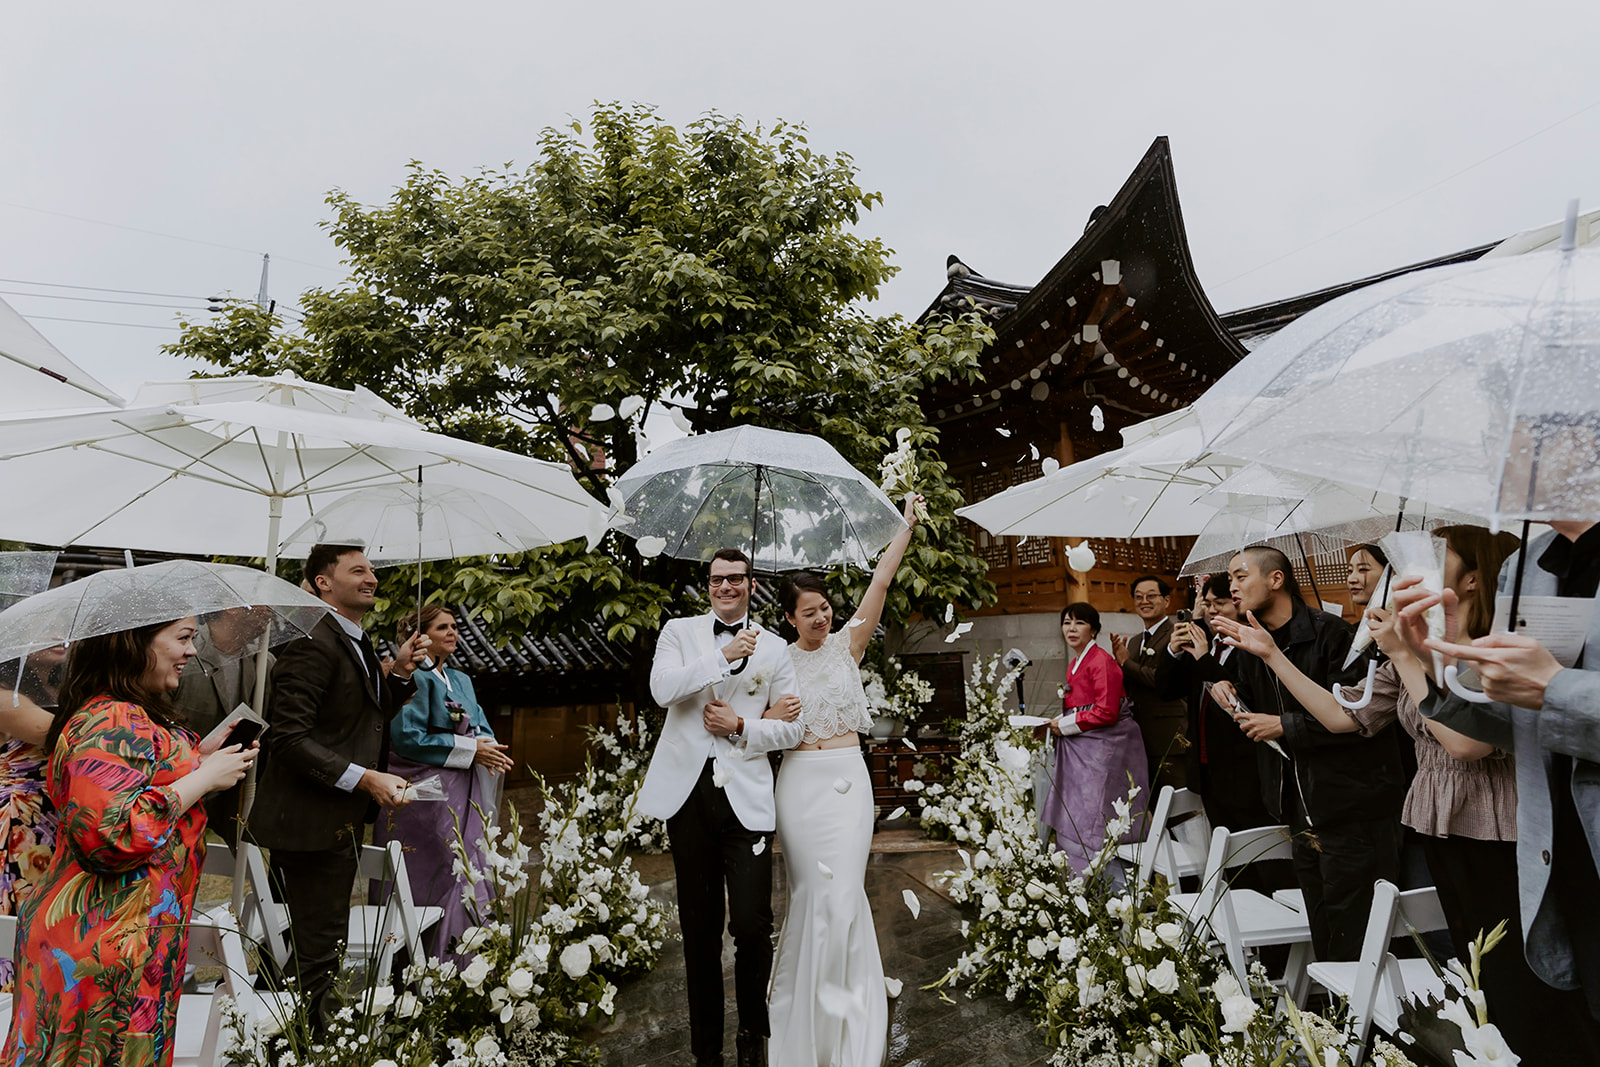 A couple is holding umbrellas during their hanok wedding ceremony.